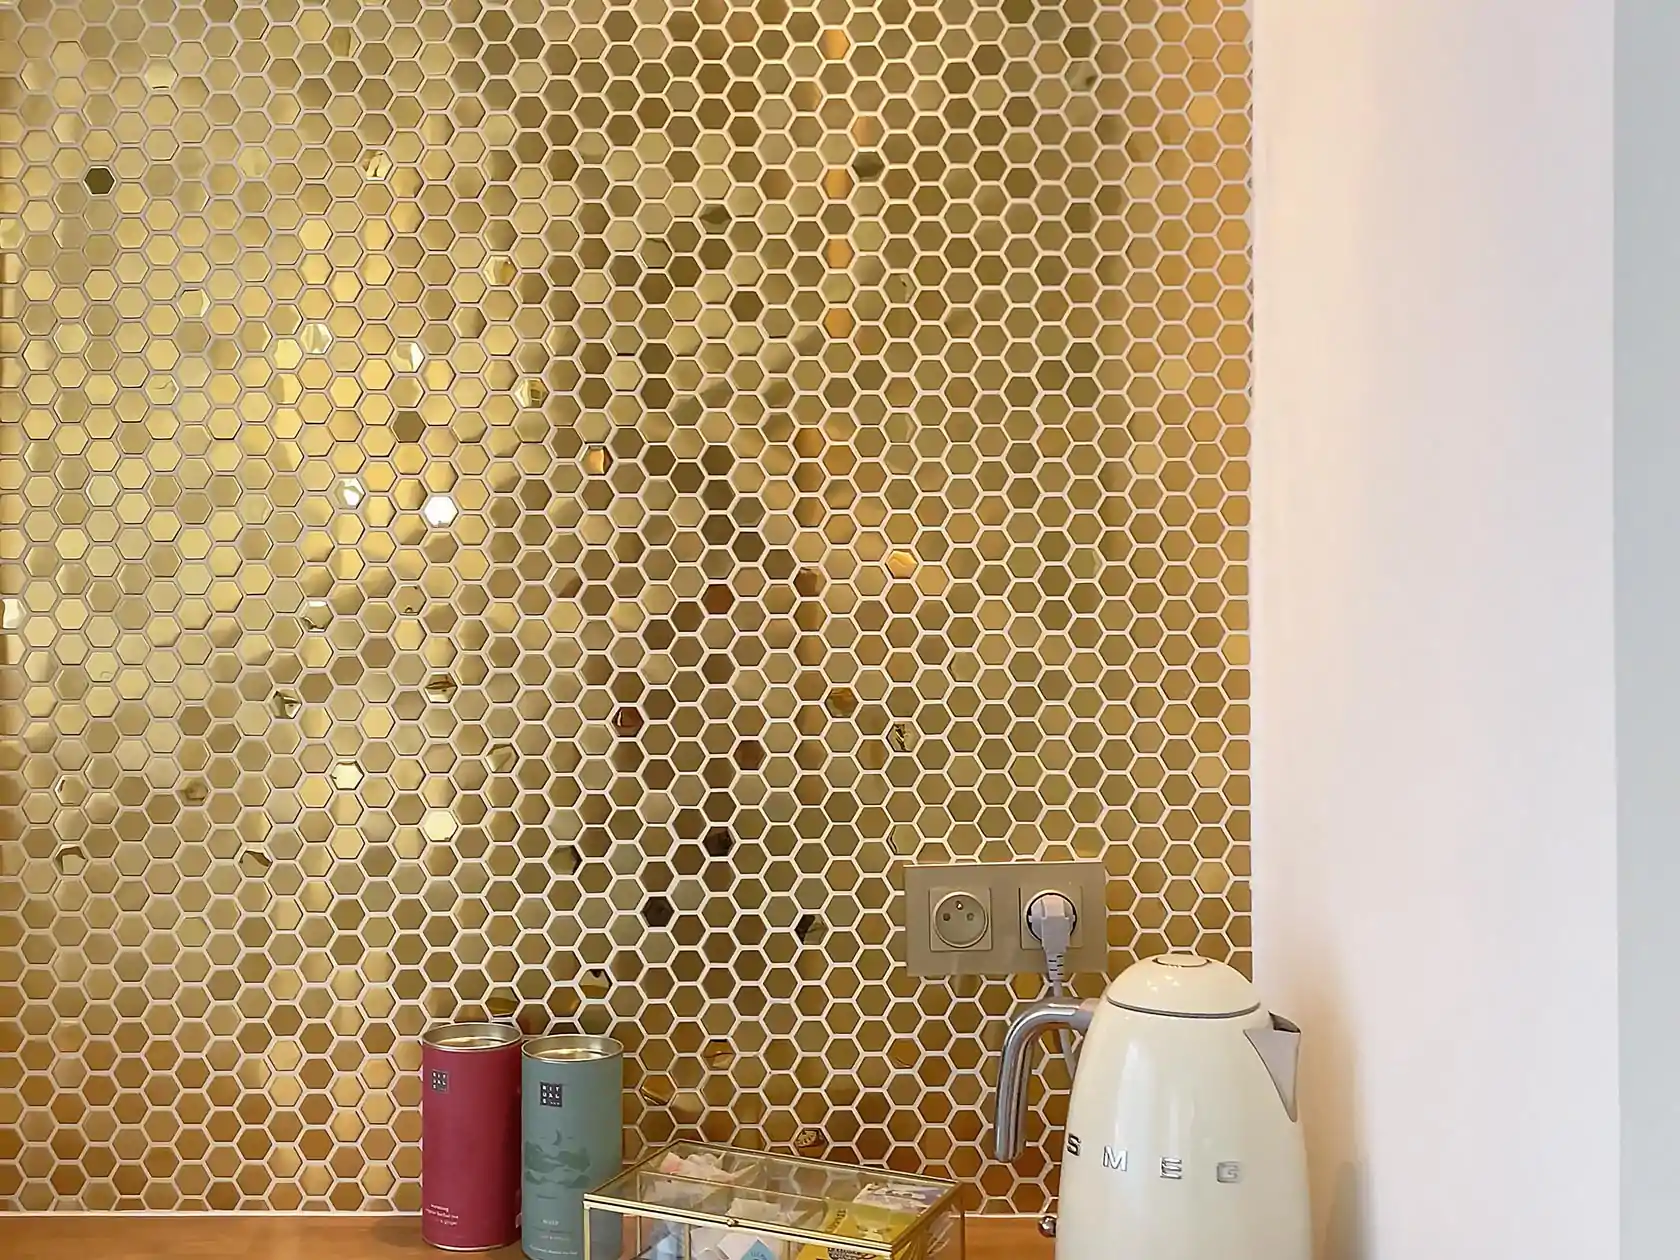 Golden Backsplash Kitchen Wall Tiles Patterned Tiles Bathroom Hexagon Mosaic Interiordesign  3